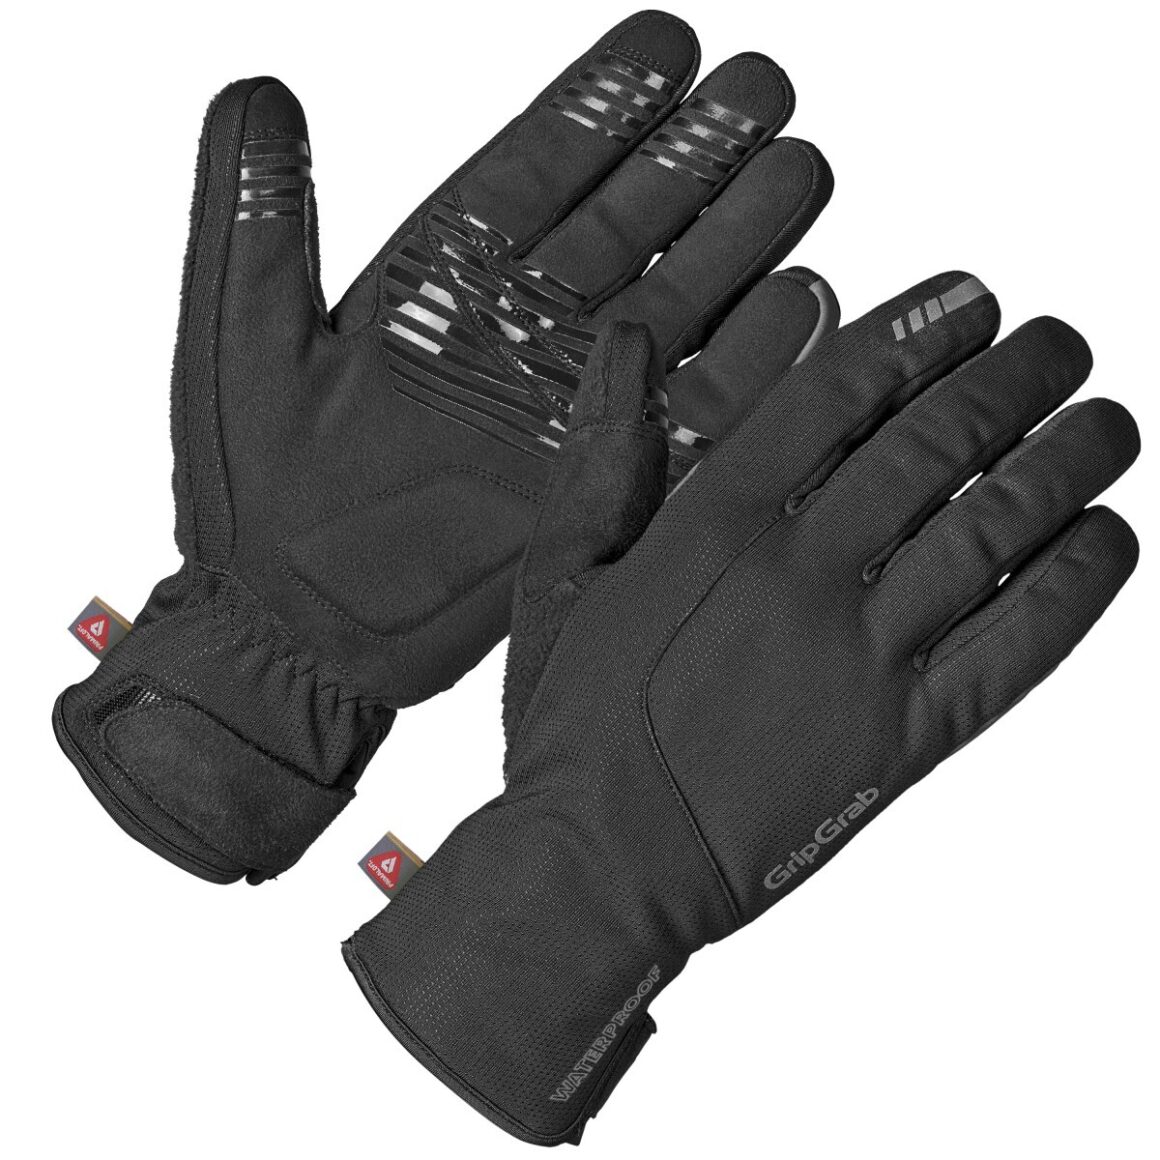 GripGrab Gripgrab Polaris 2 Waterproof Winter Gloves - L